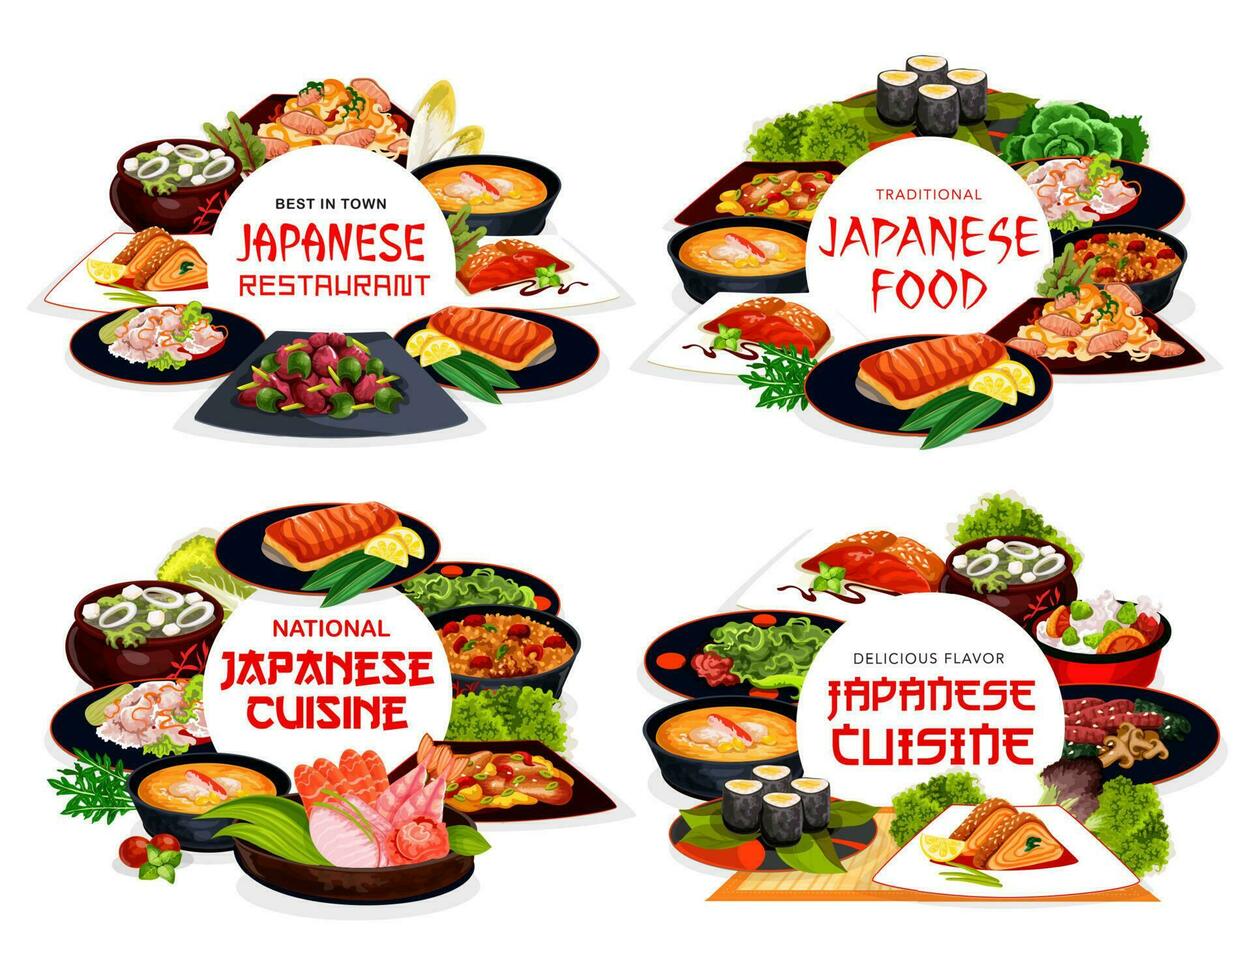 Japanese cuisine food Japan dishes restaurant menu vector